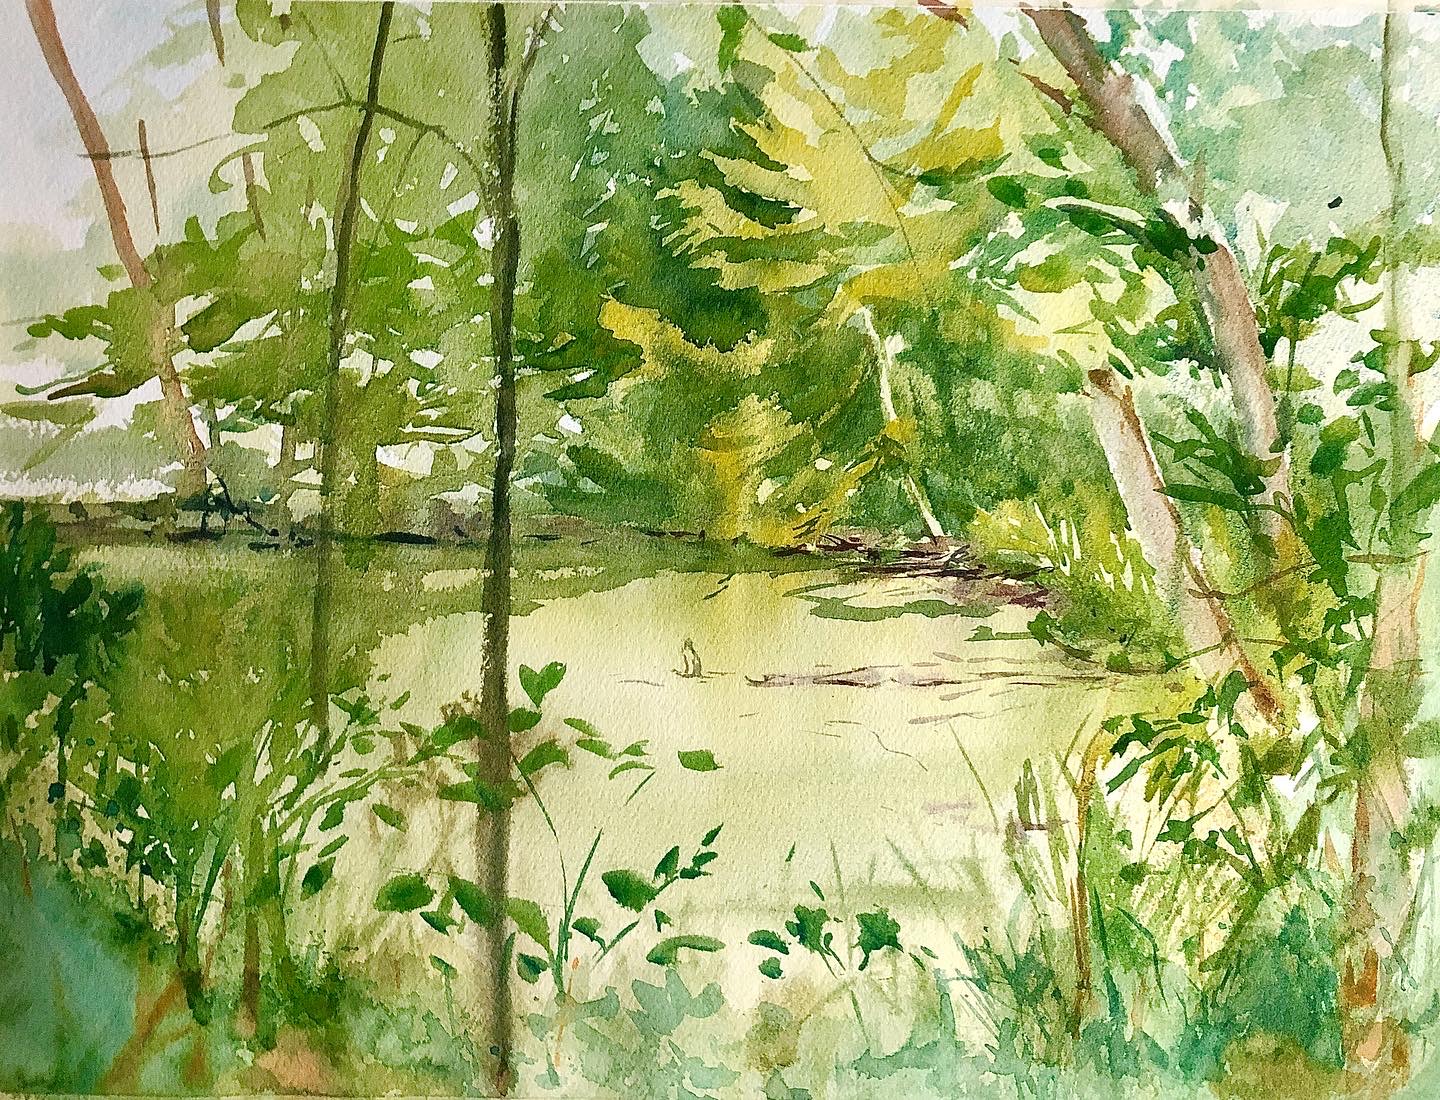 Upper Sangamon River  Allerton
Watercolor
15" X 11"
$250.